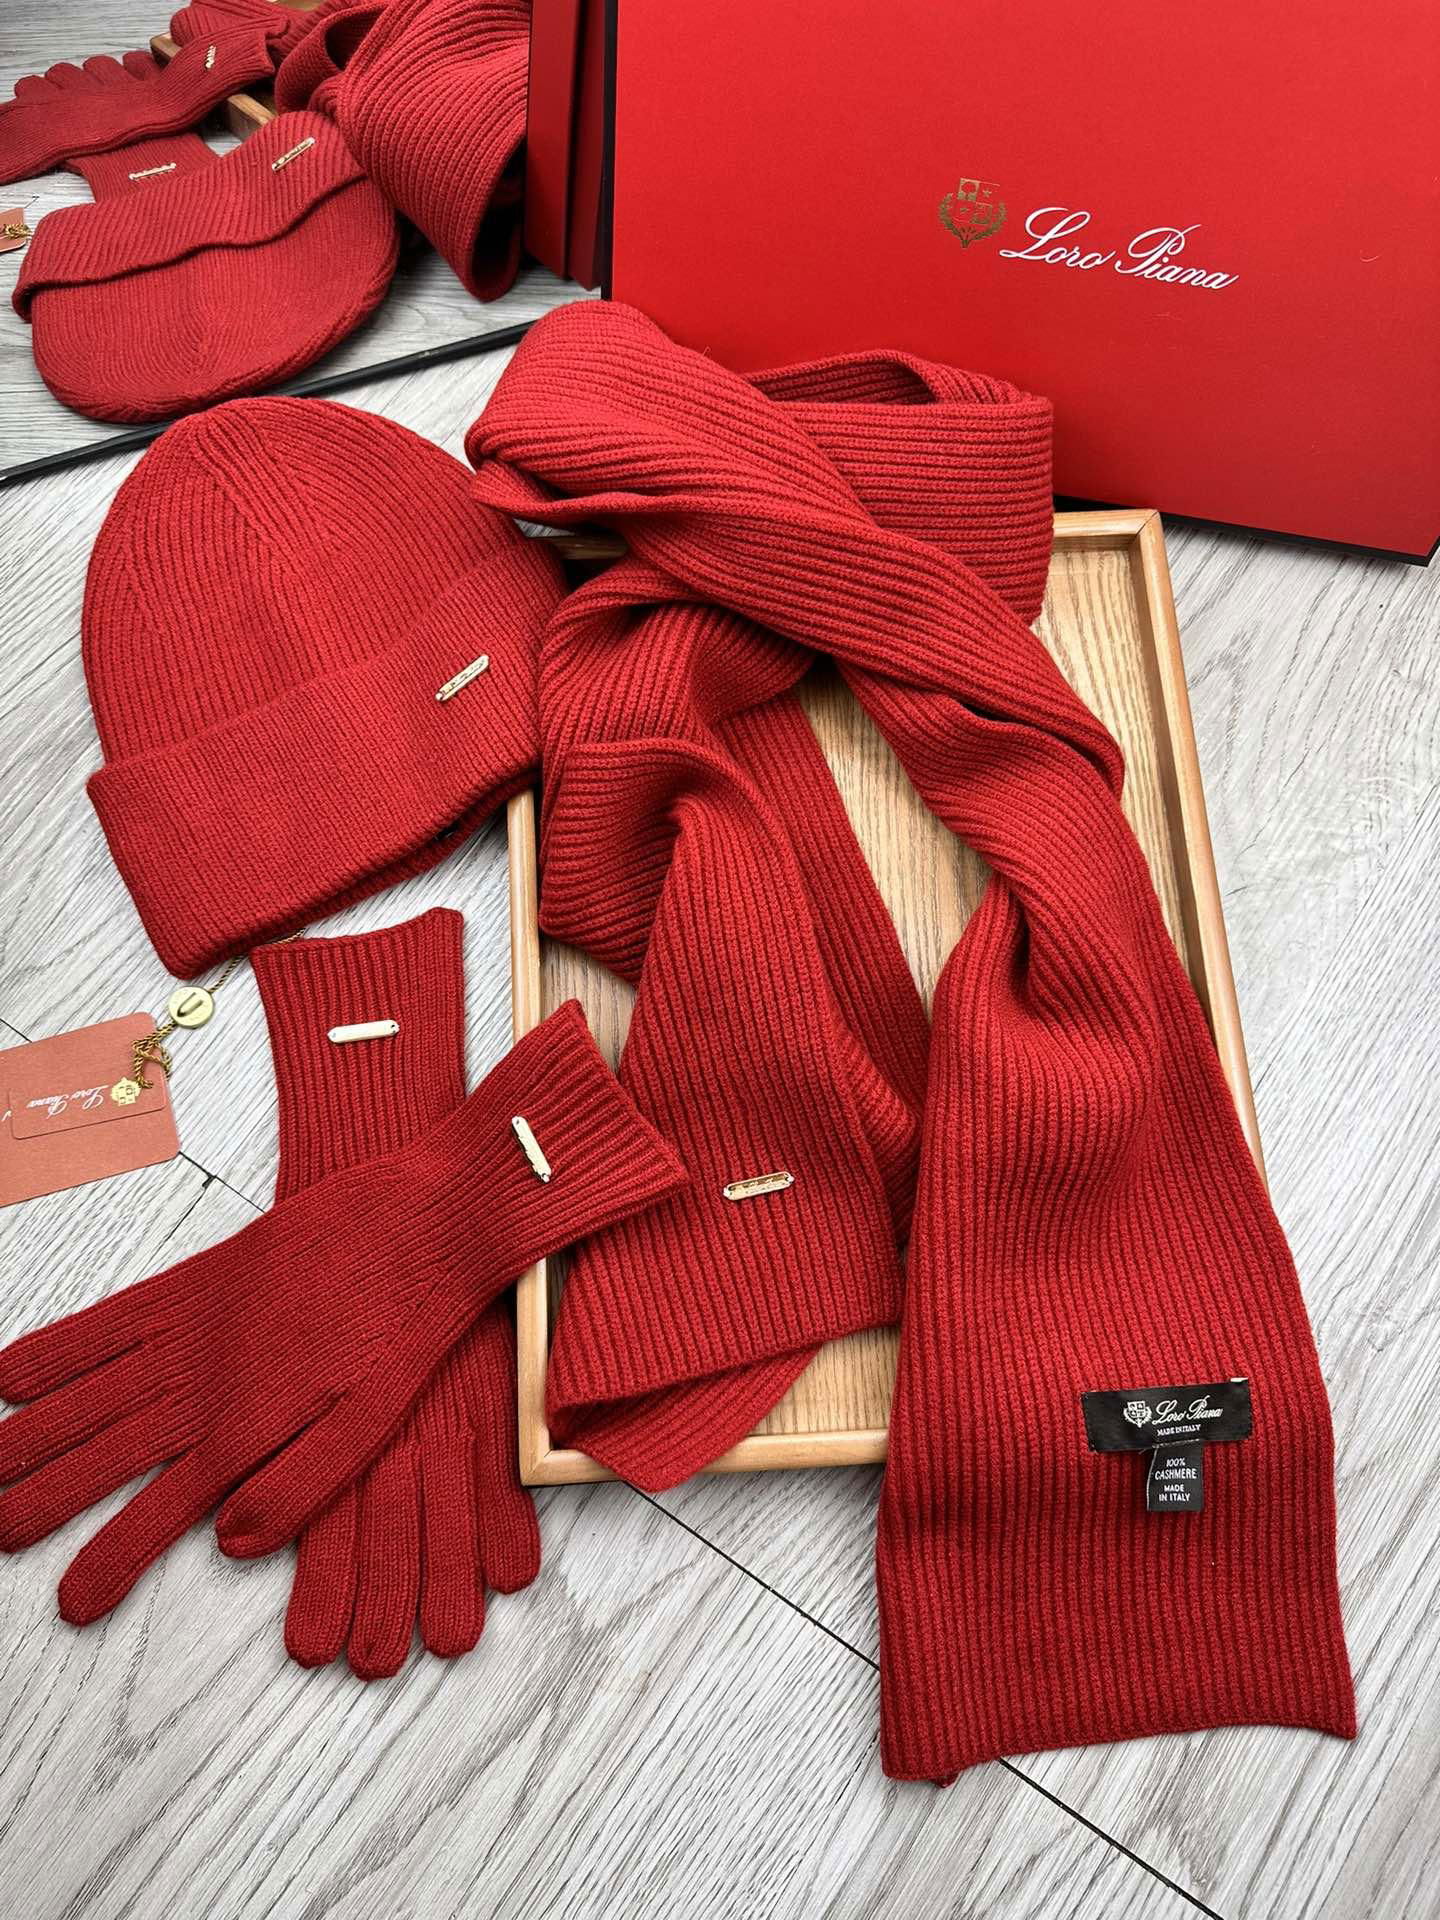 Loro Piana scarf hat set,Loro Piana gloves,Loro Piana cashmere scarf UK, 3